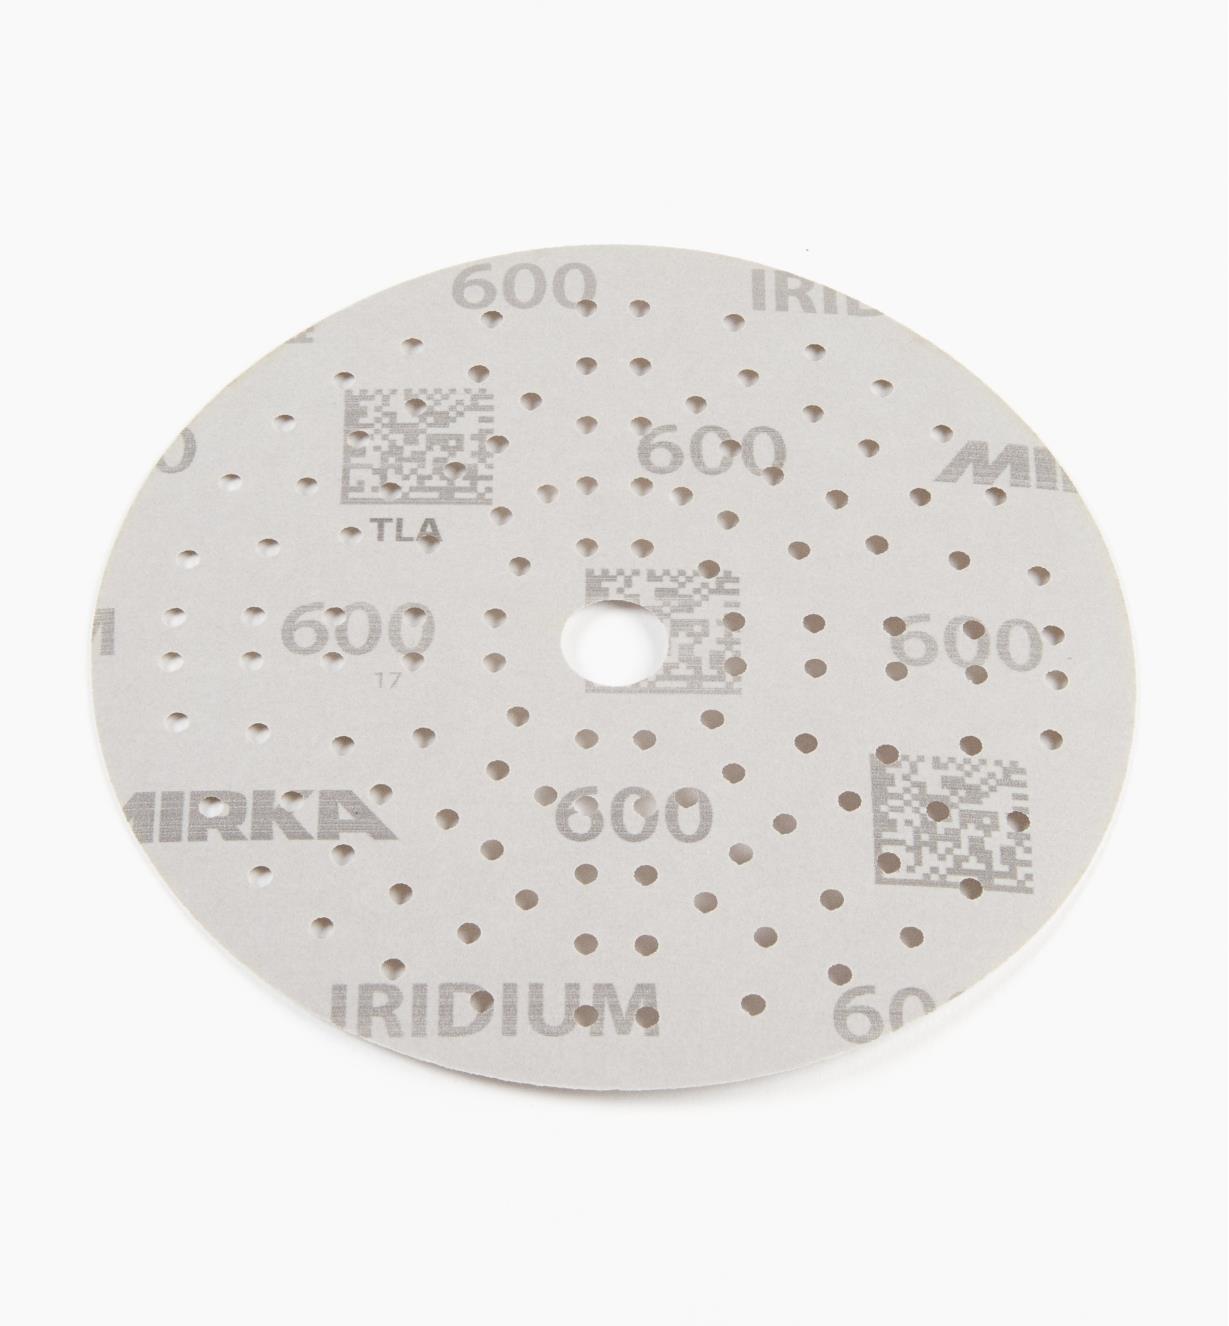 08K1732 - 600x 6" 121-Hole Iridium Grip Disc, ea.